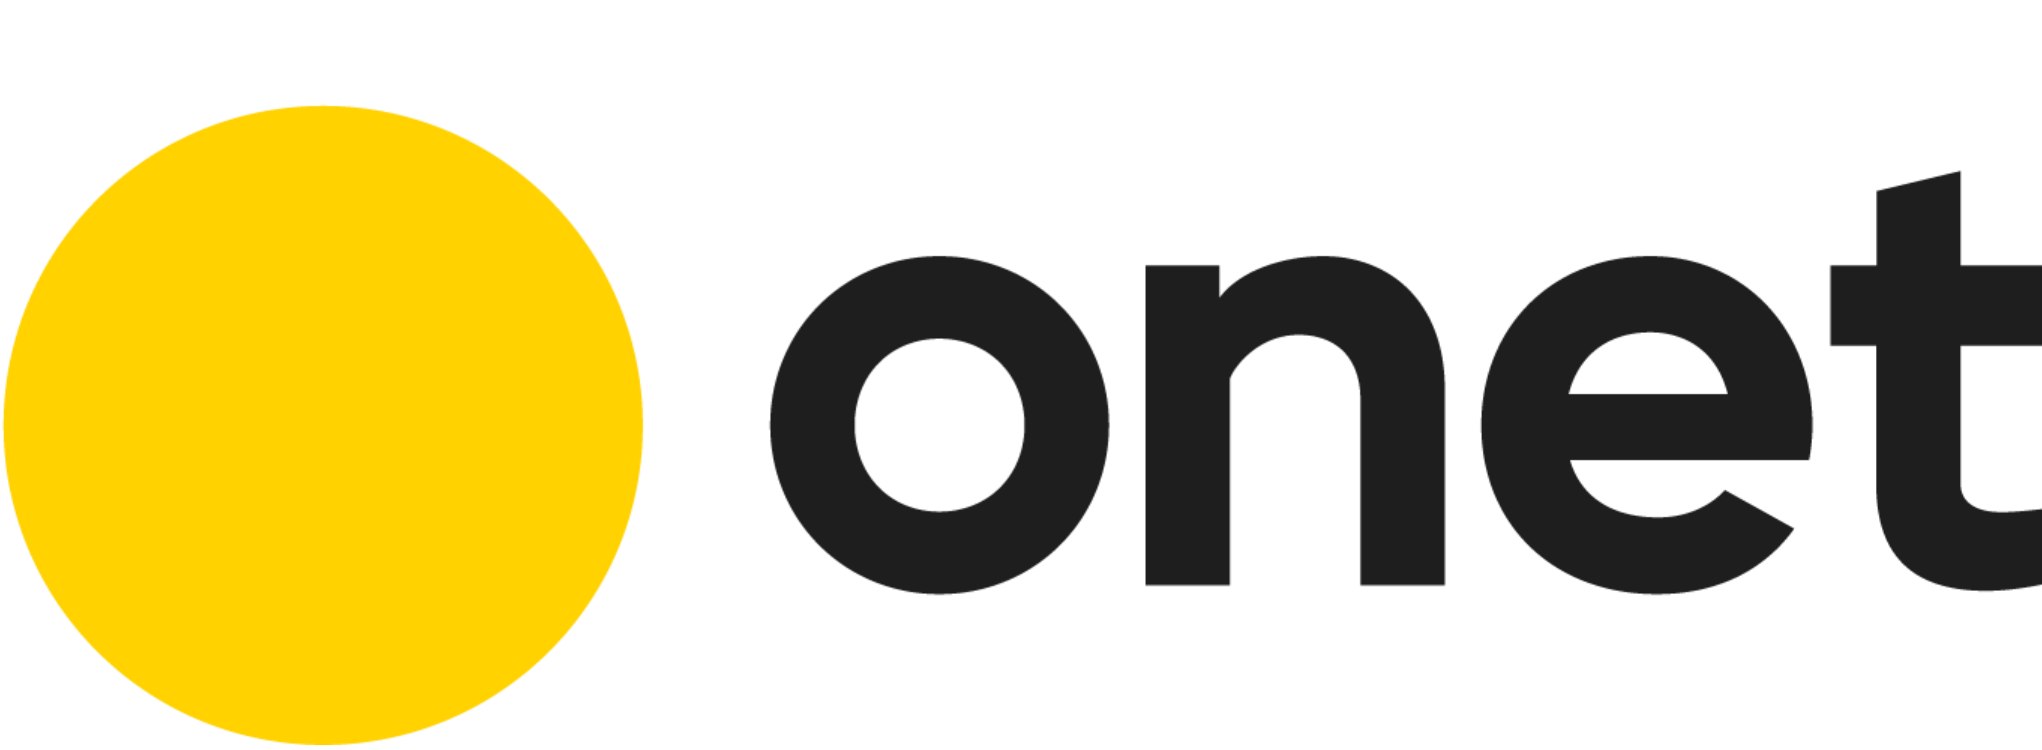 logo portalu Onet.pl